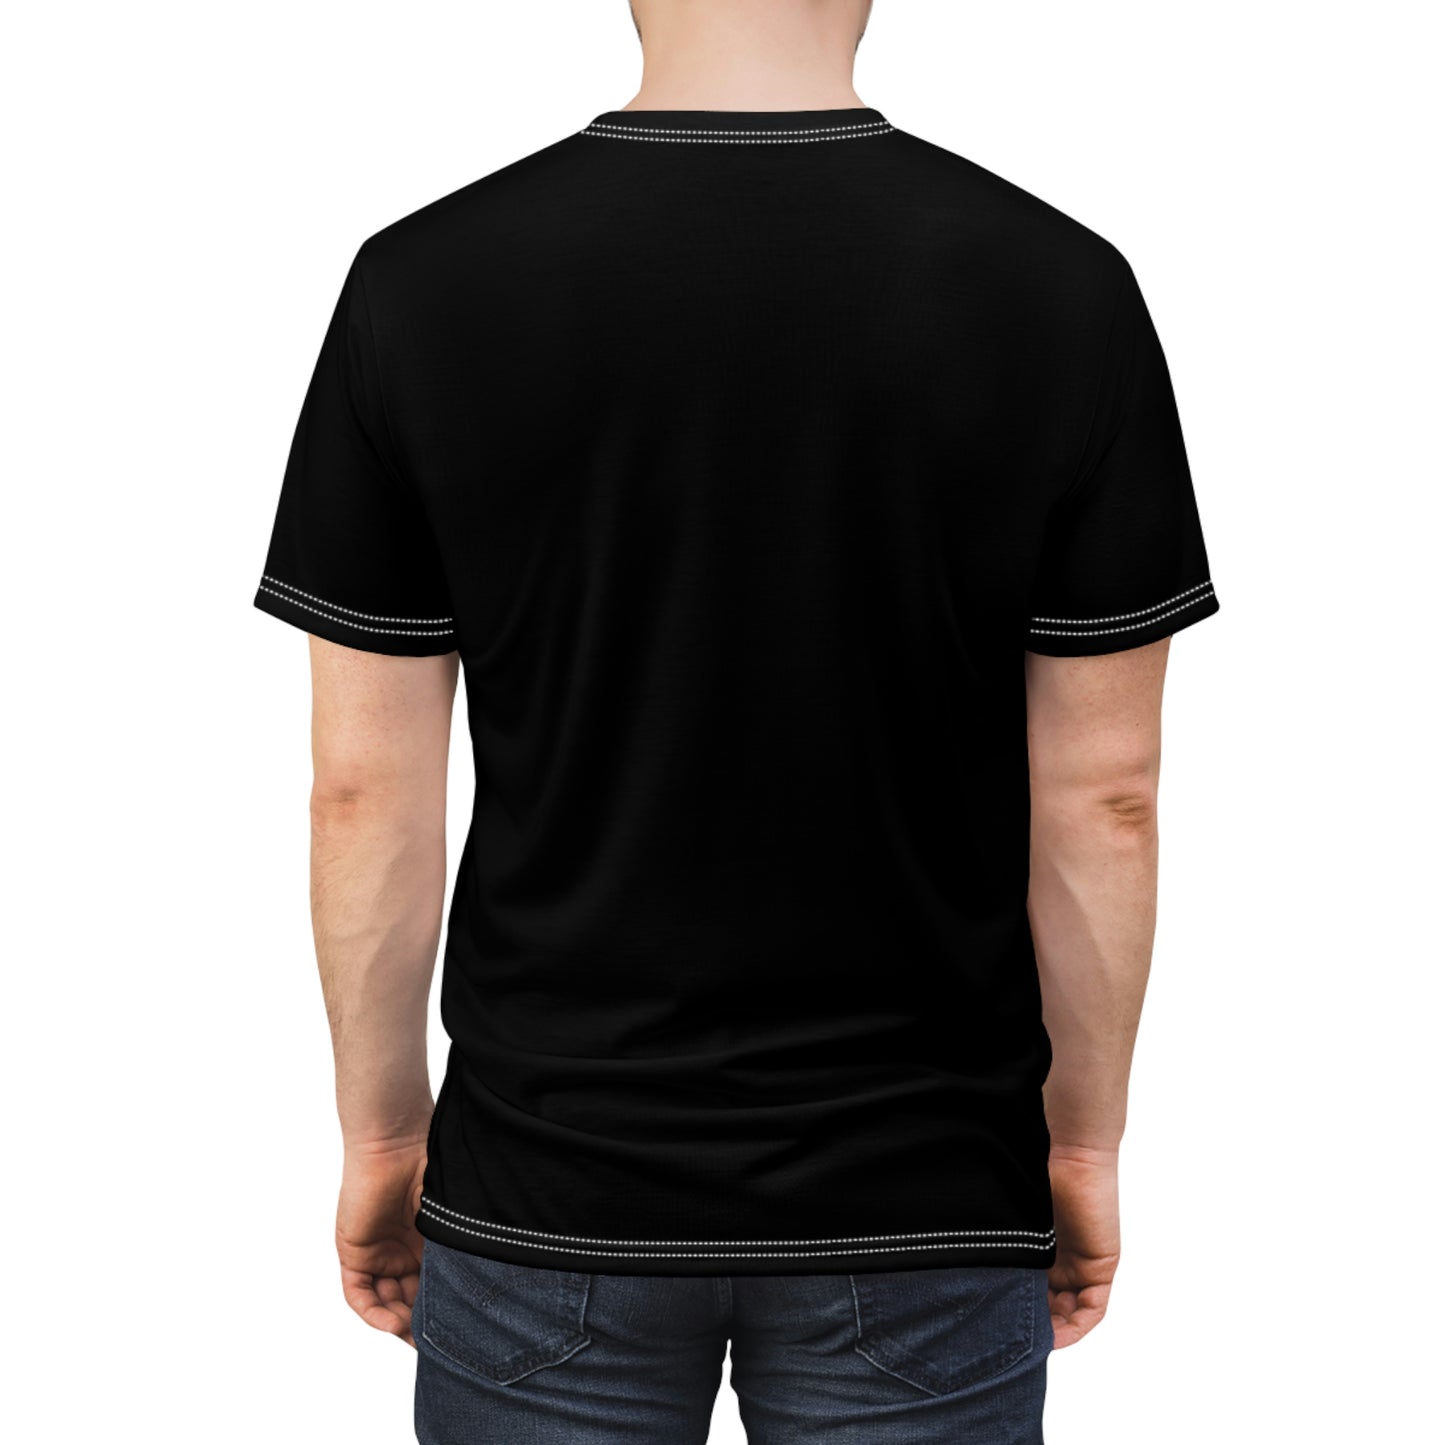 Saucy Jacky - Unisex All-Over Print Cut & Sew T-Shirt